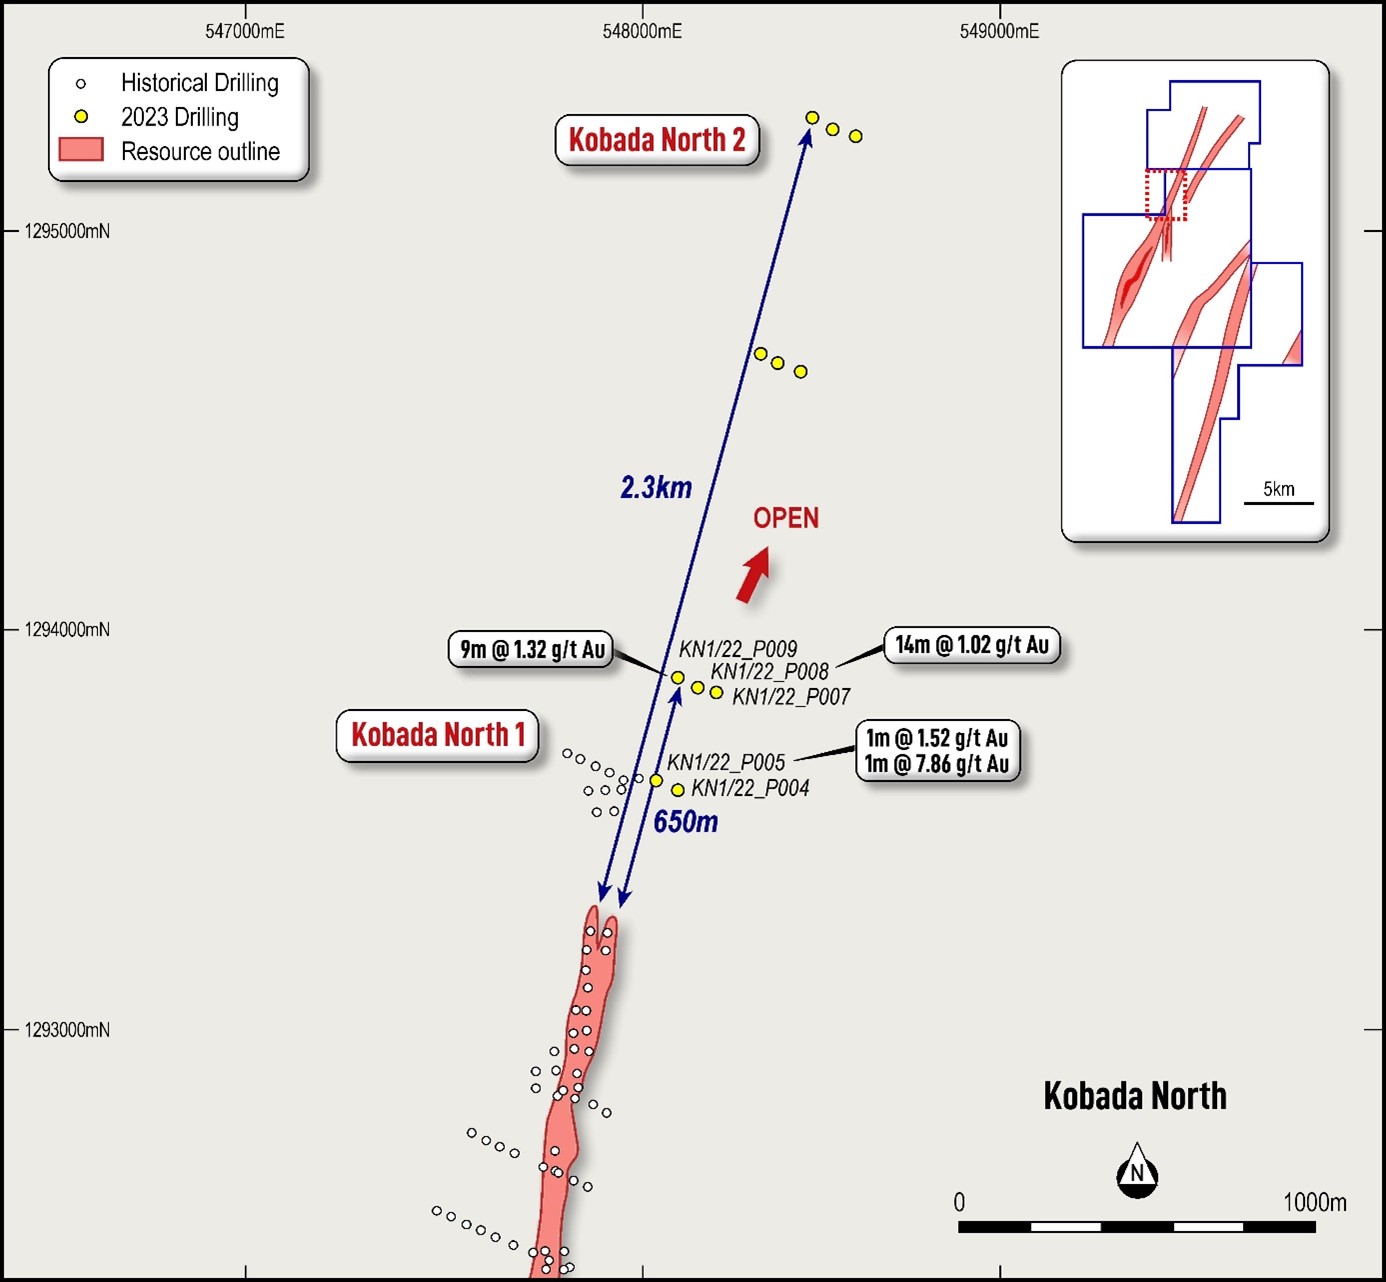 Plan showing Kobada North targets and Toubani drilling